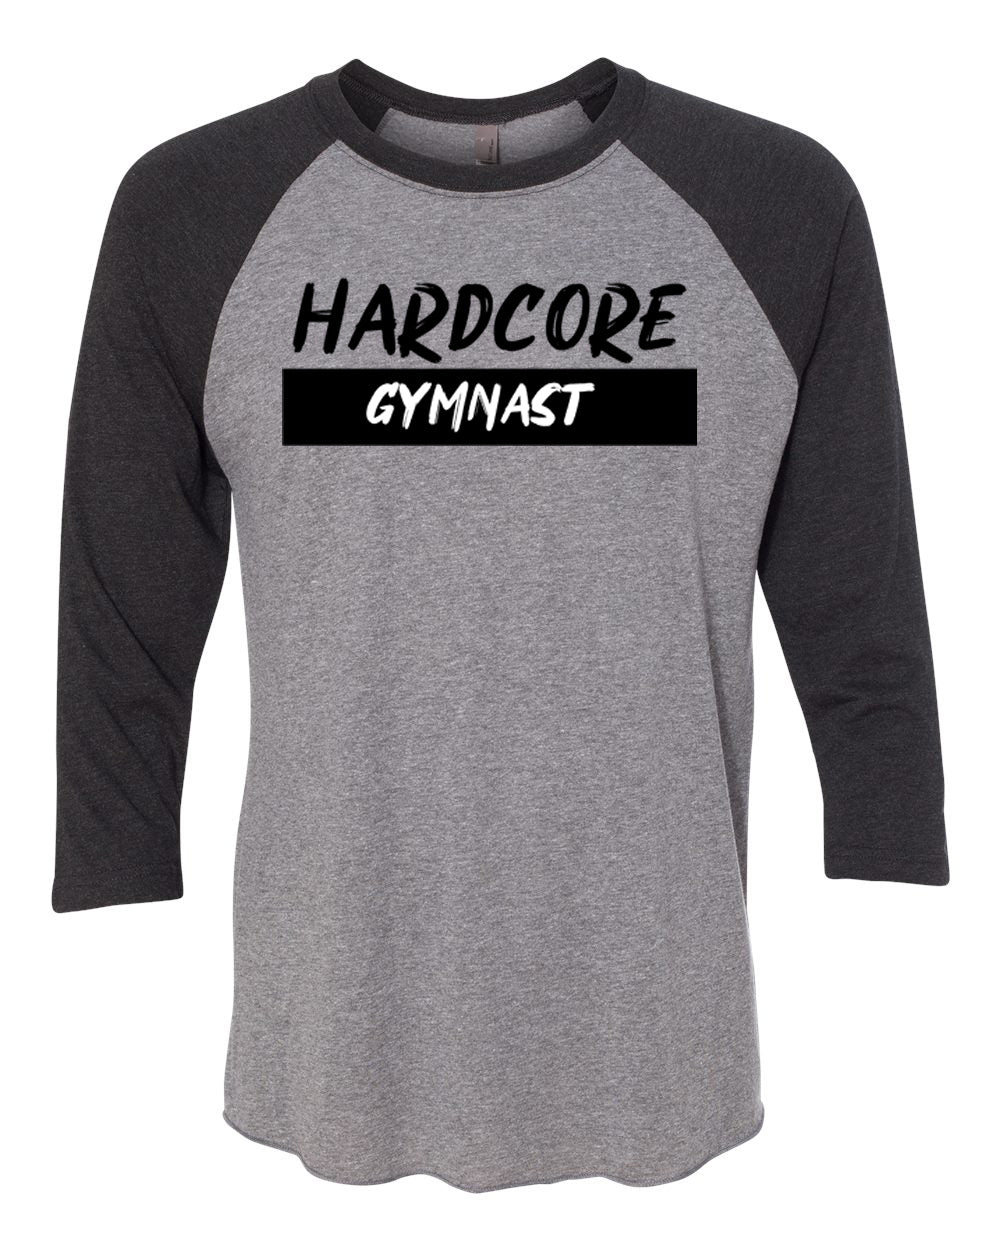 Hardcore Gymnast Adult 3/4 Sleeve Raglan T-Shirt